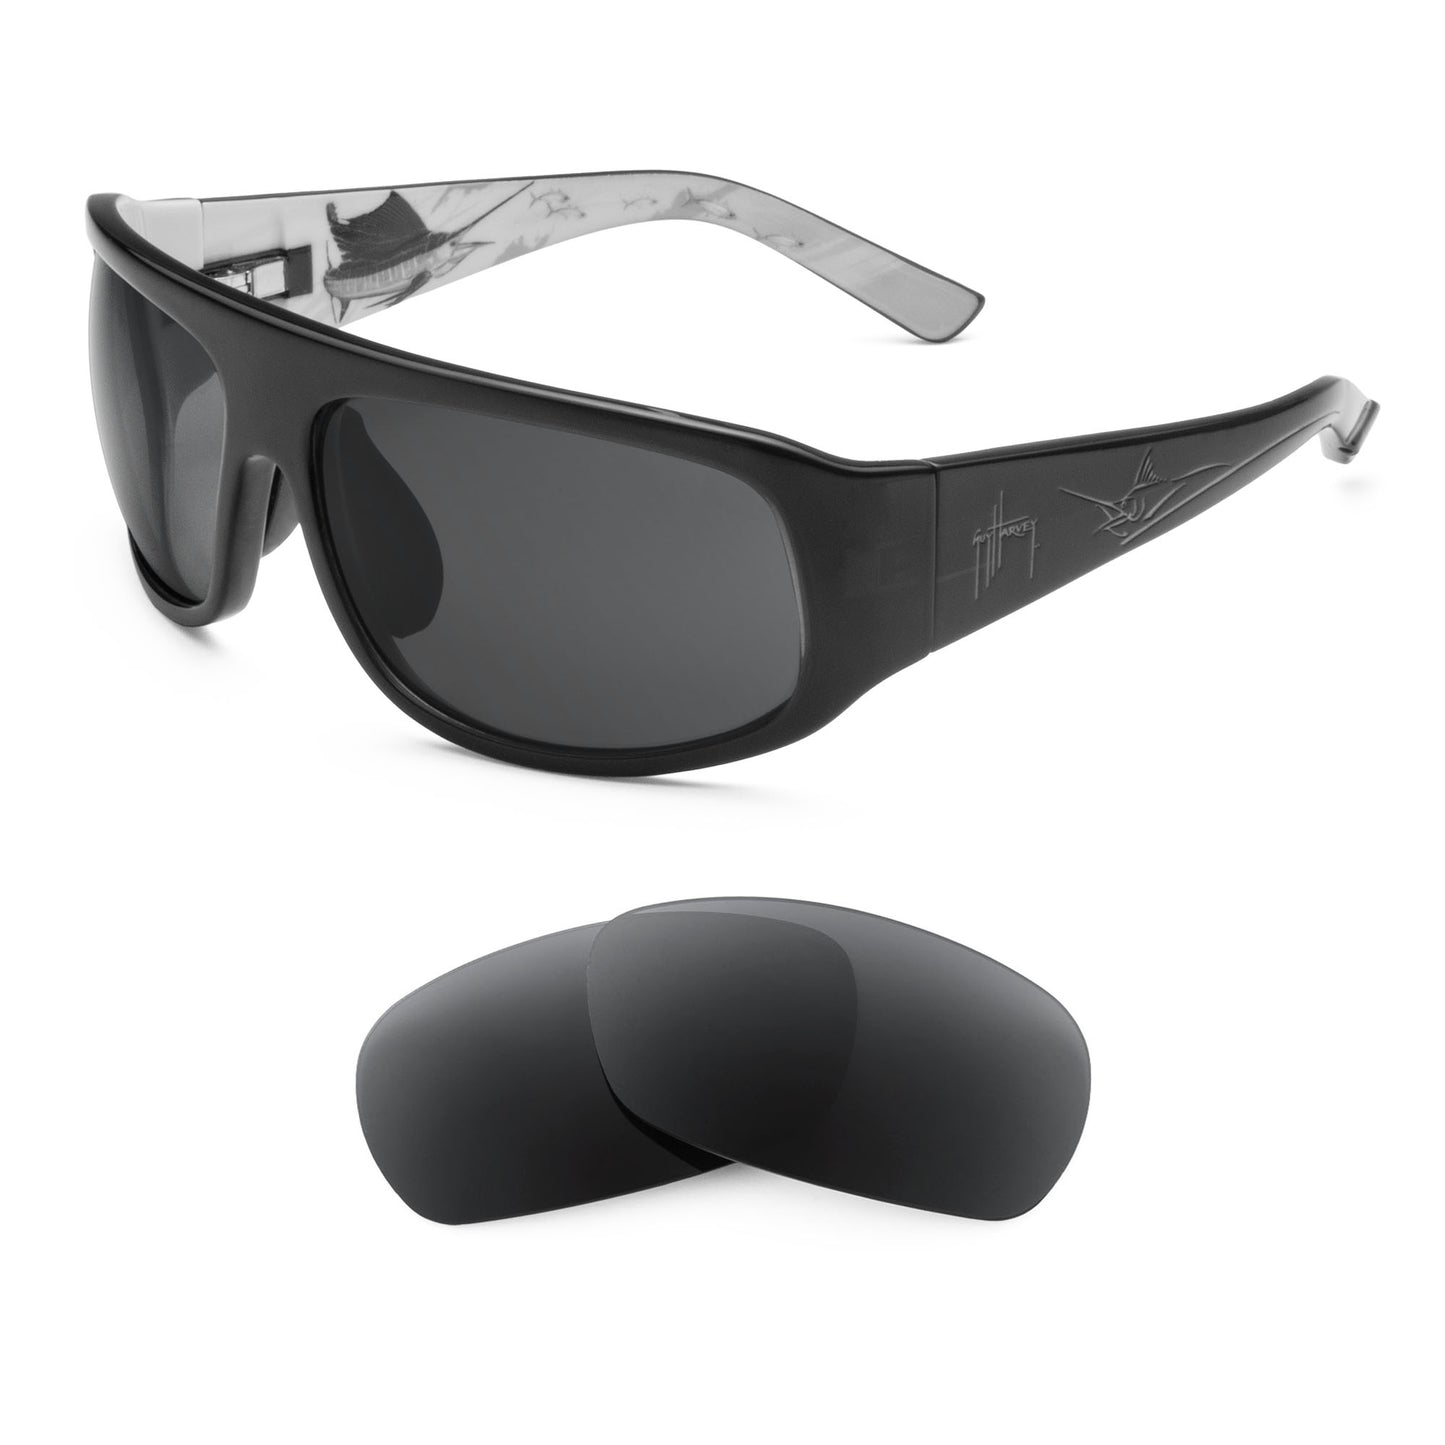 Maui Jim Guy Harvey Sailfish MJ233 sunglasses with replacement lenses